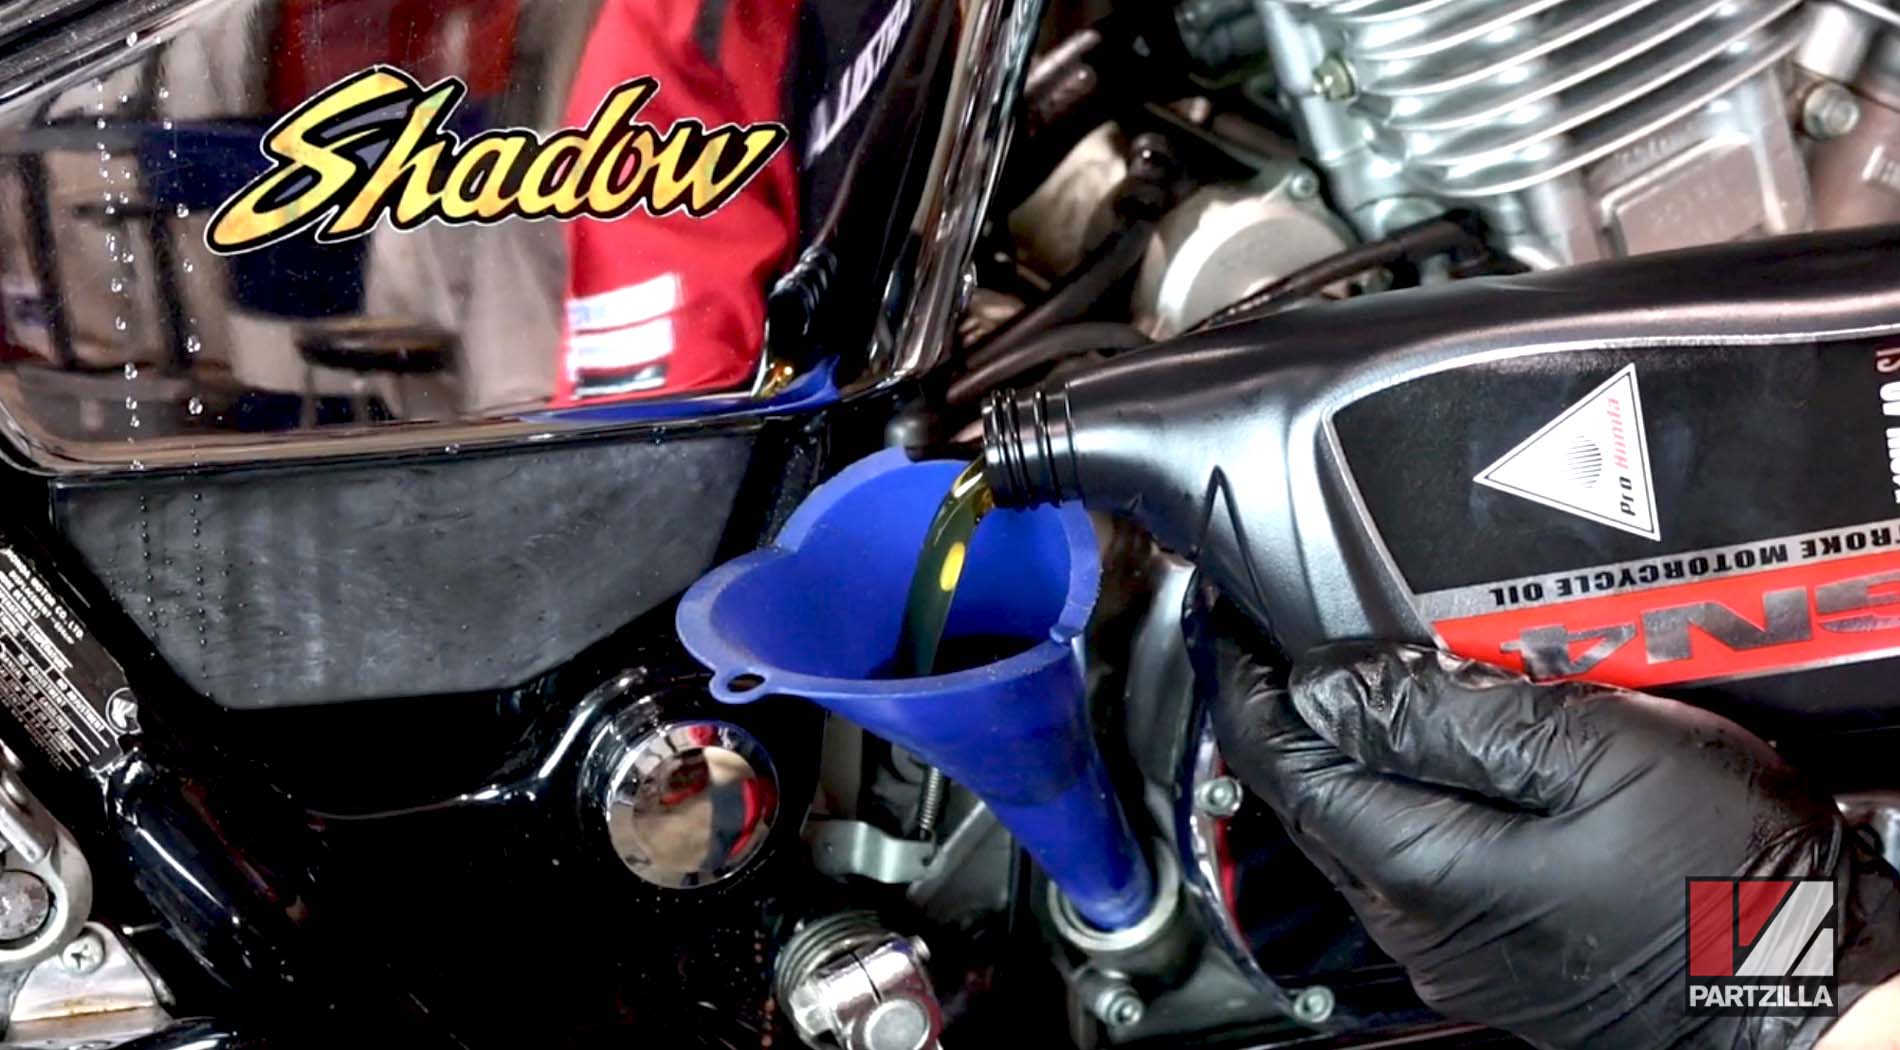 1986 Honda Shadow motorcycle oil change